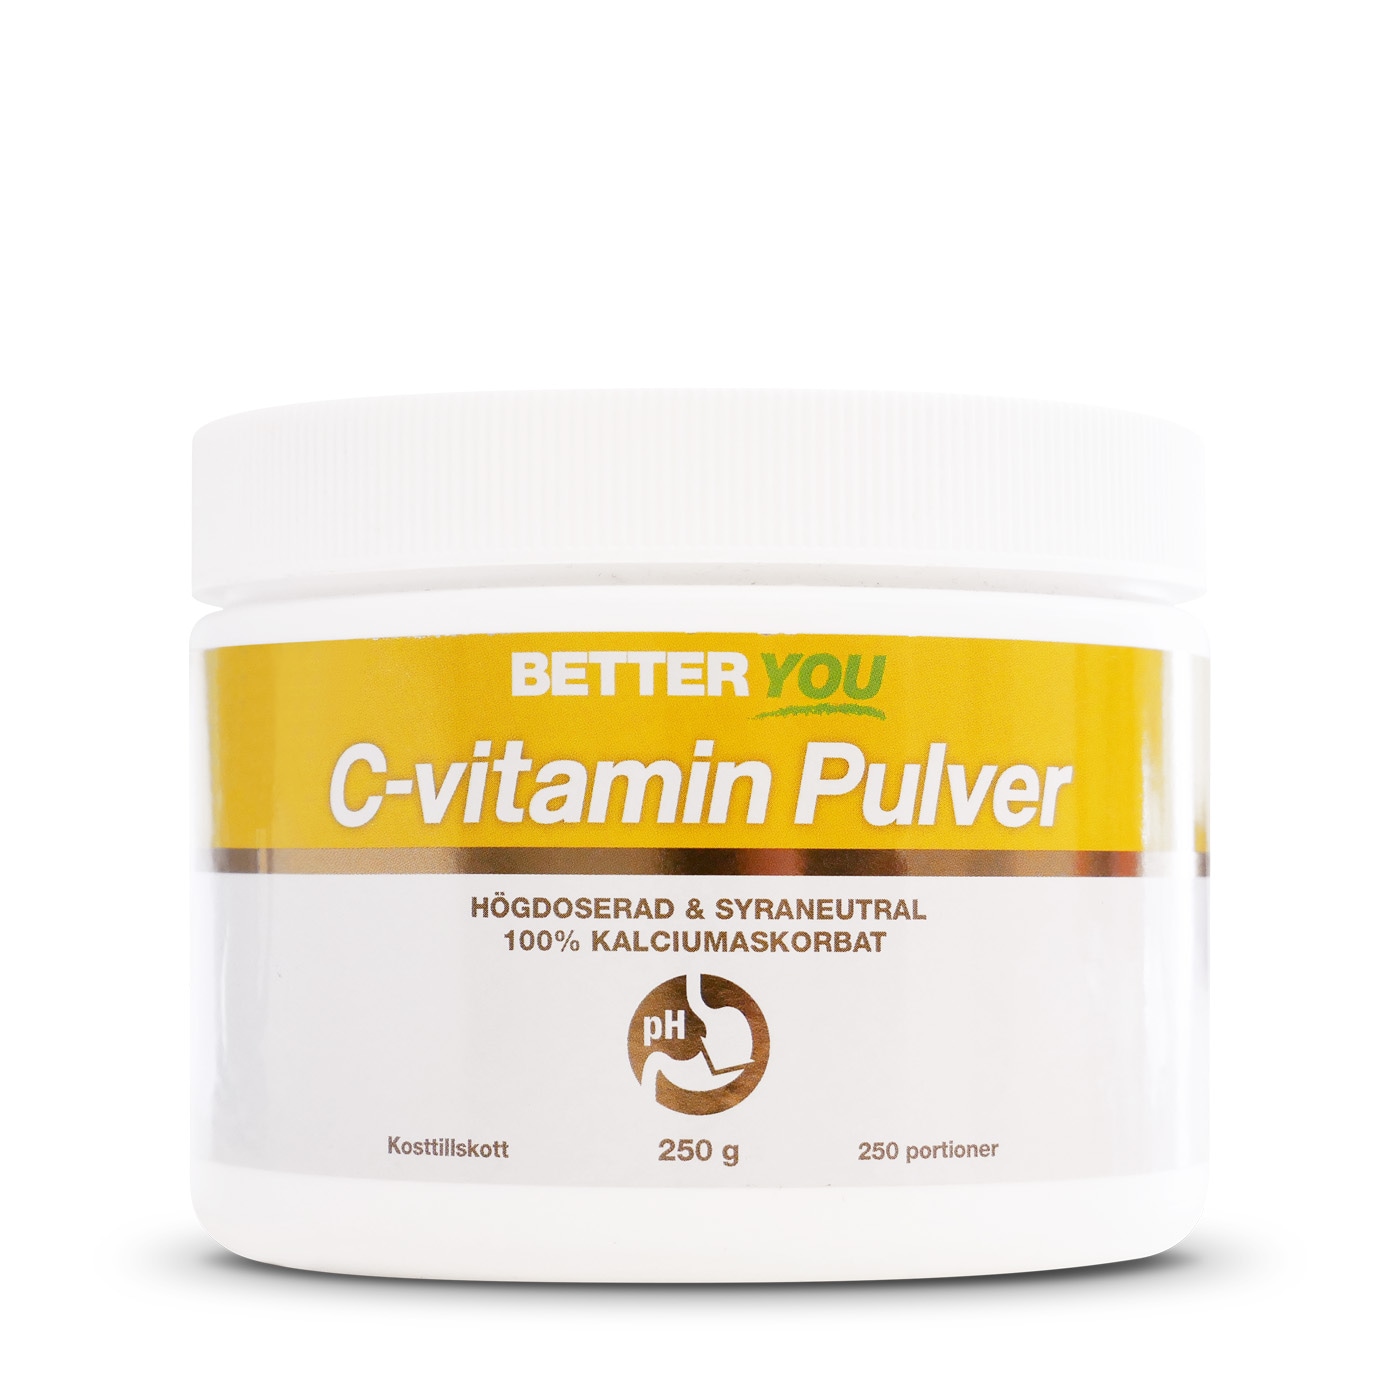 C-vitamin Pulver - 250 g